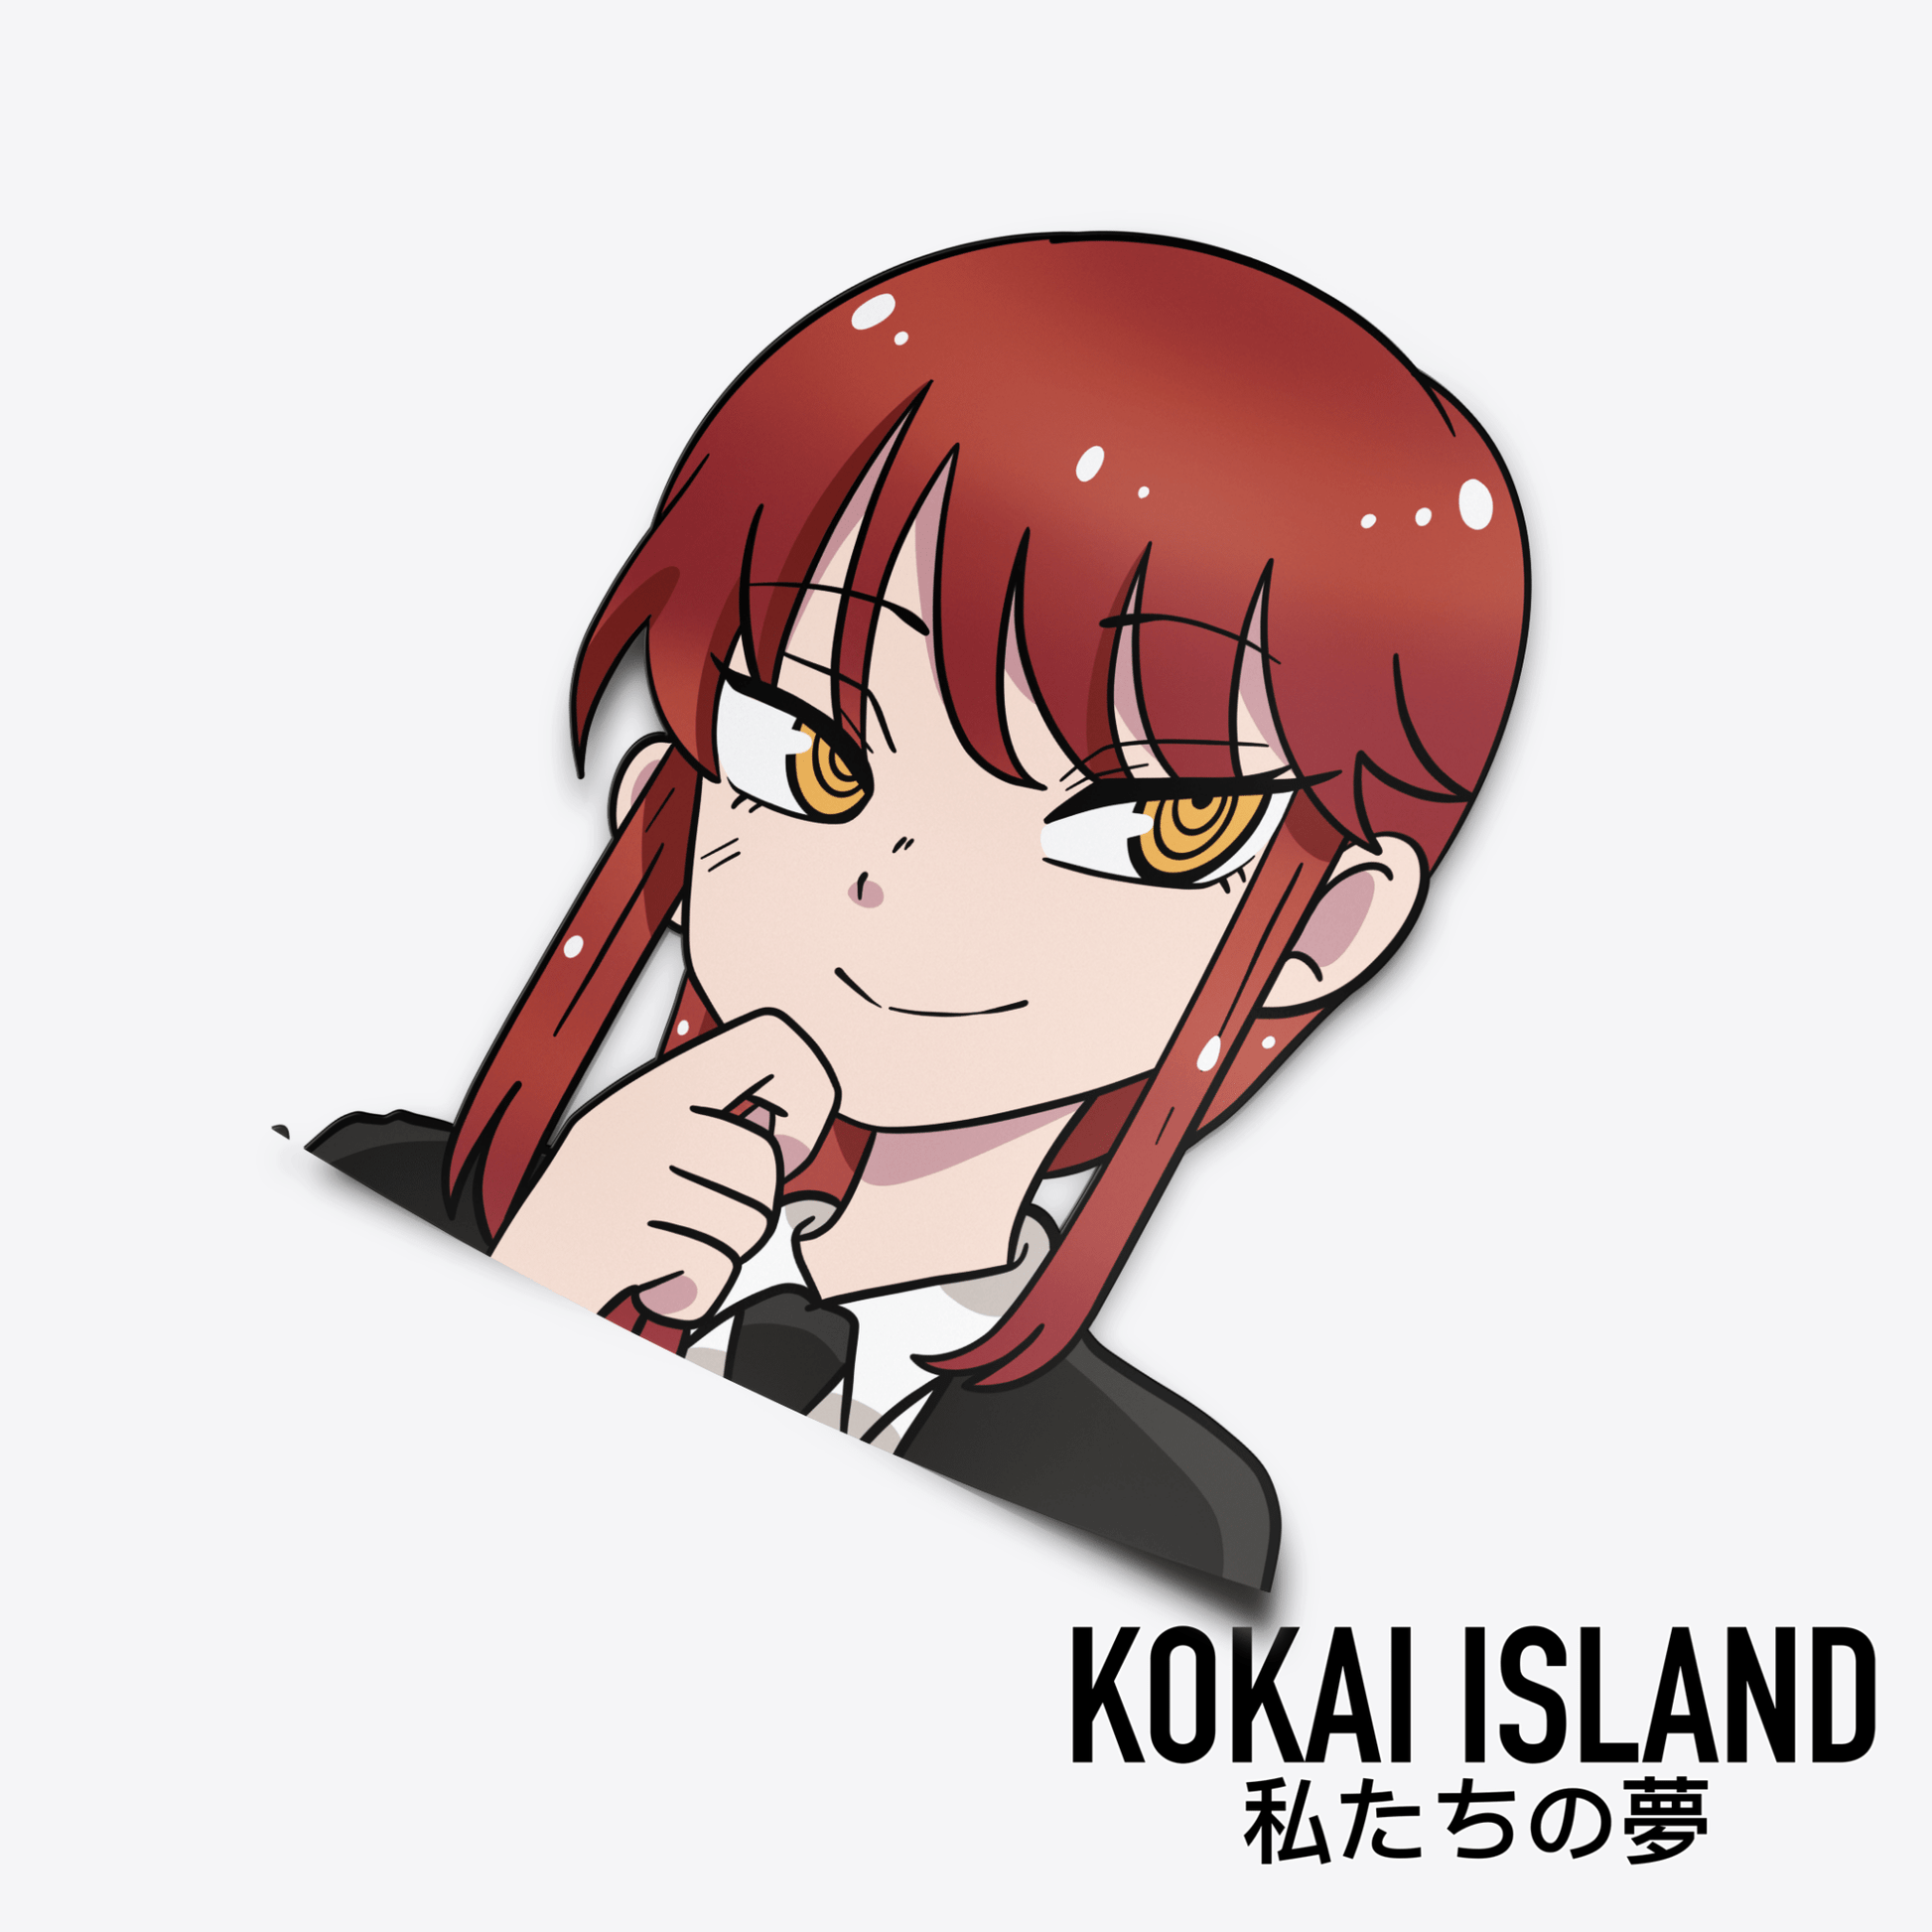 Controling Bosslady DecalDecalKokai Island